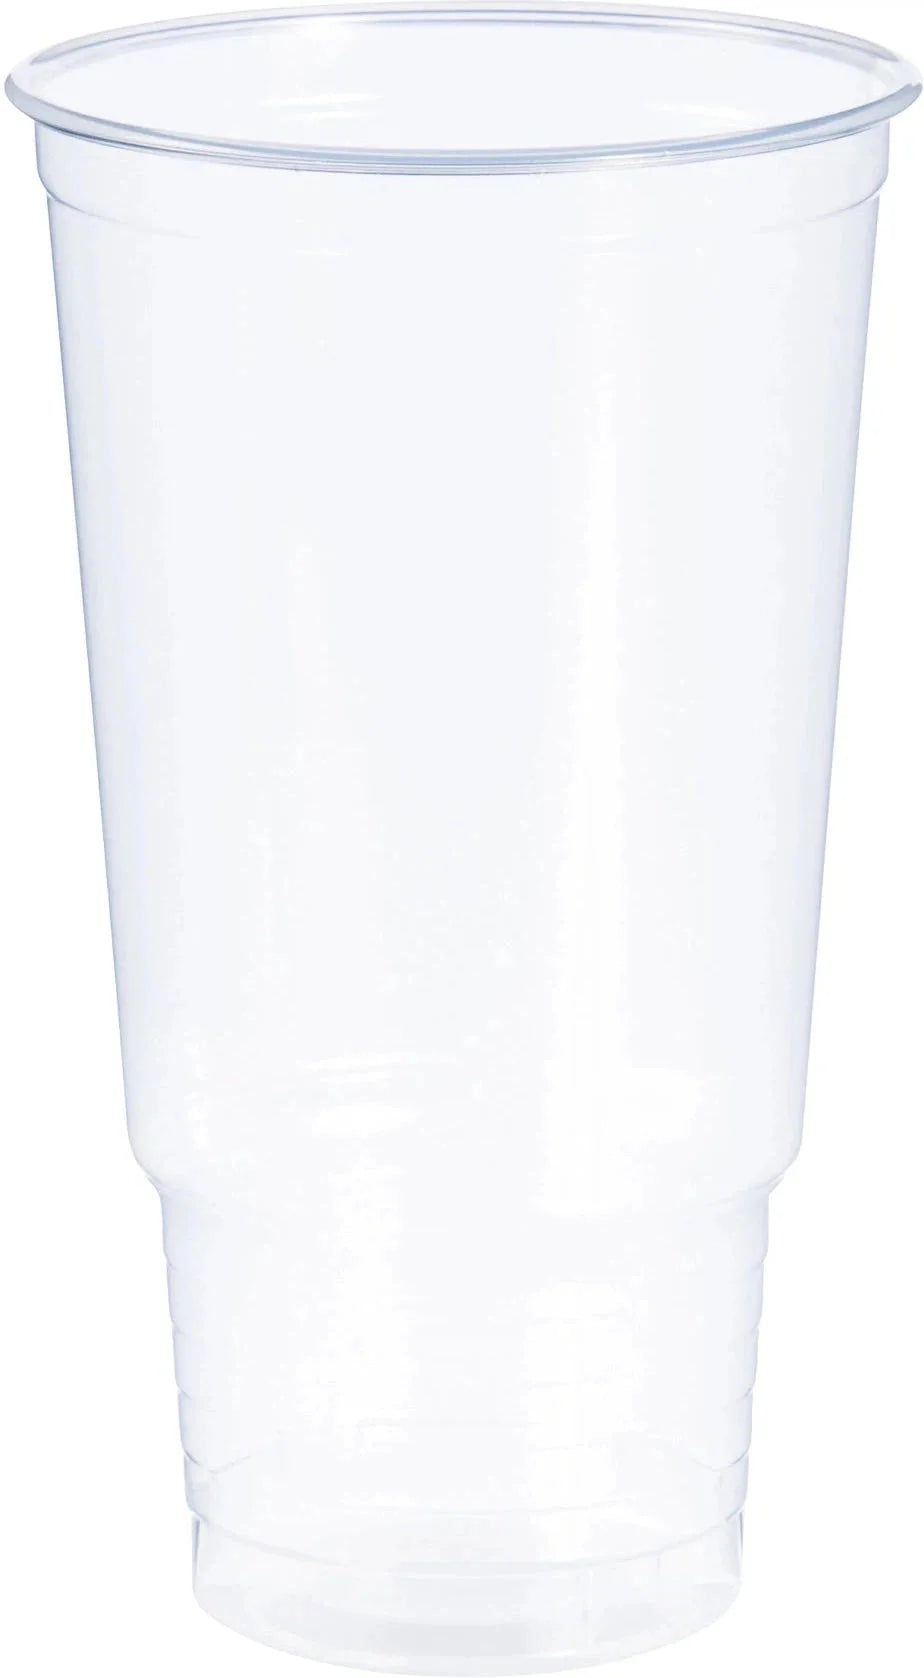 Dart Container - 32 Oz Clear PP Plastic Pedestal Cold Cup, 500/Cs - 32P